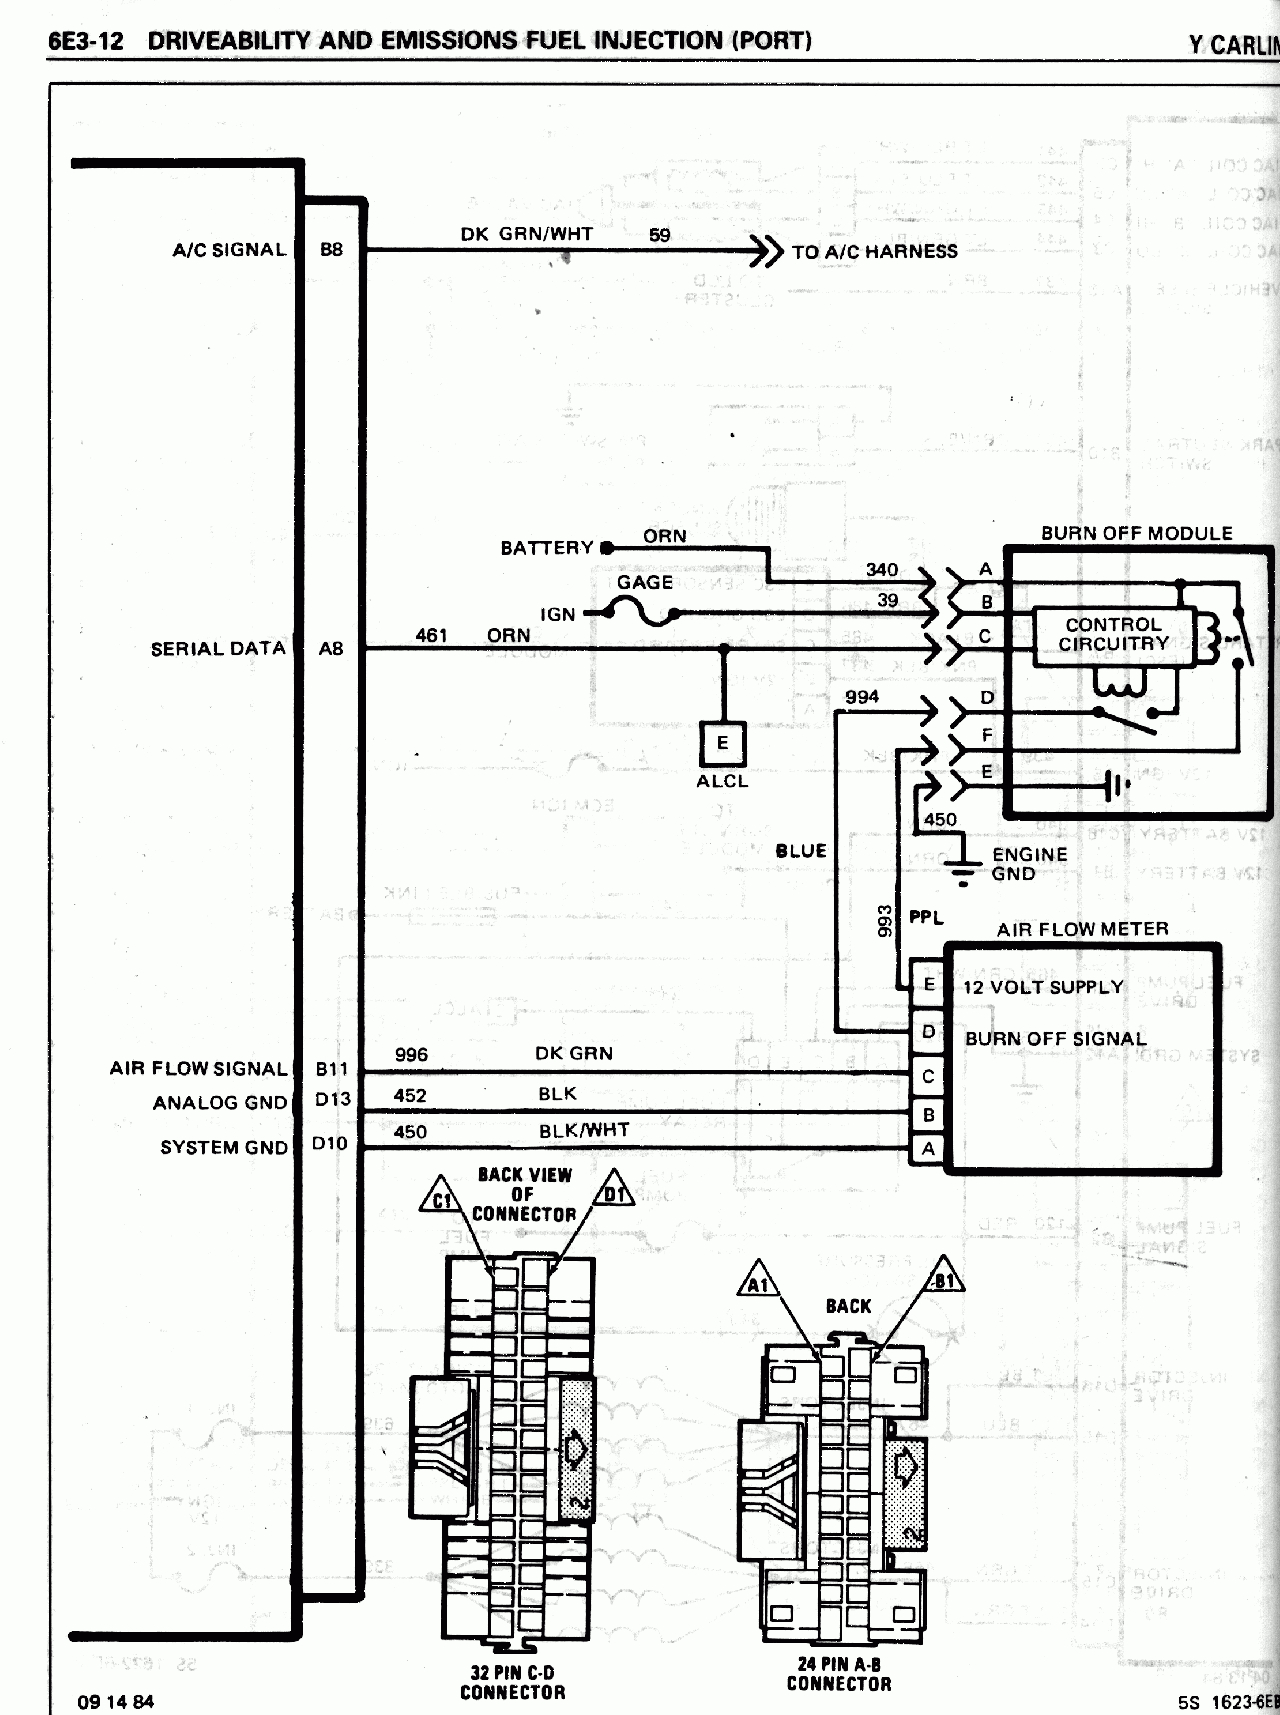 Ecm Wiring Diagram - Wiring Diagram Data - Cat 70 Pin Ecm Wiring Diagram